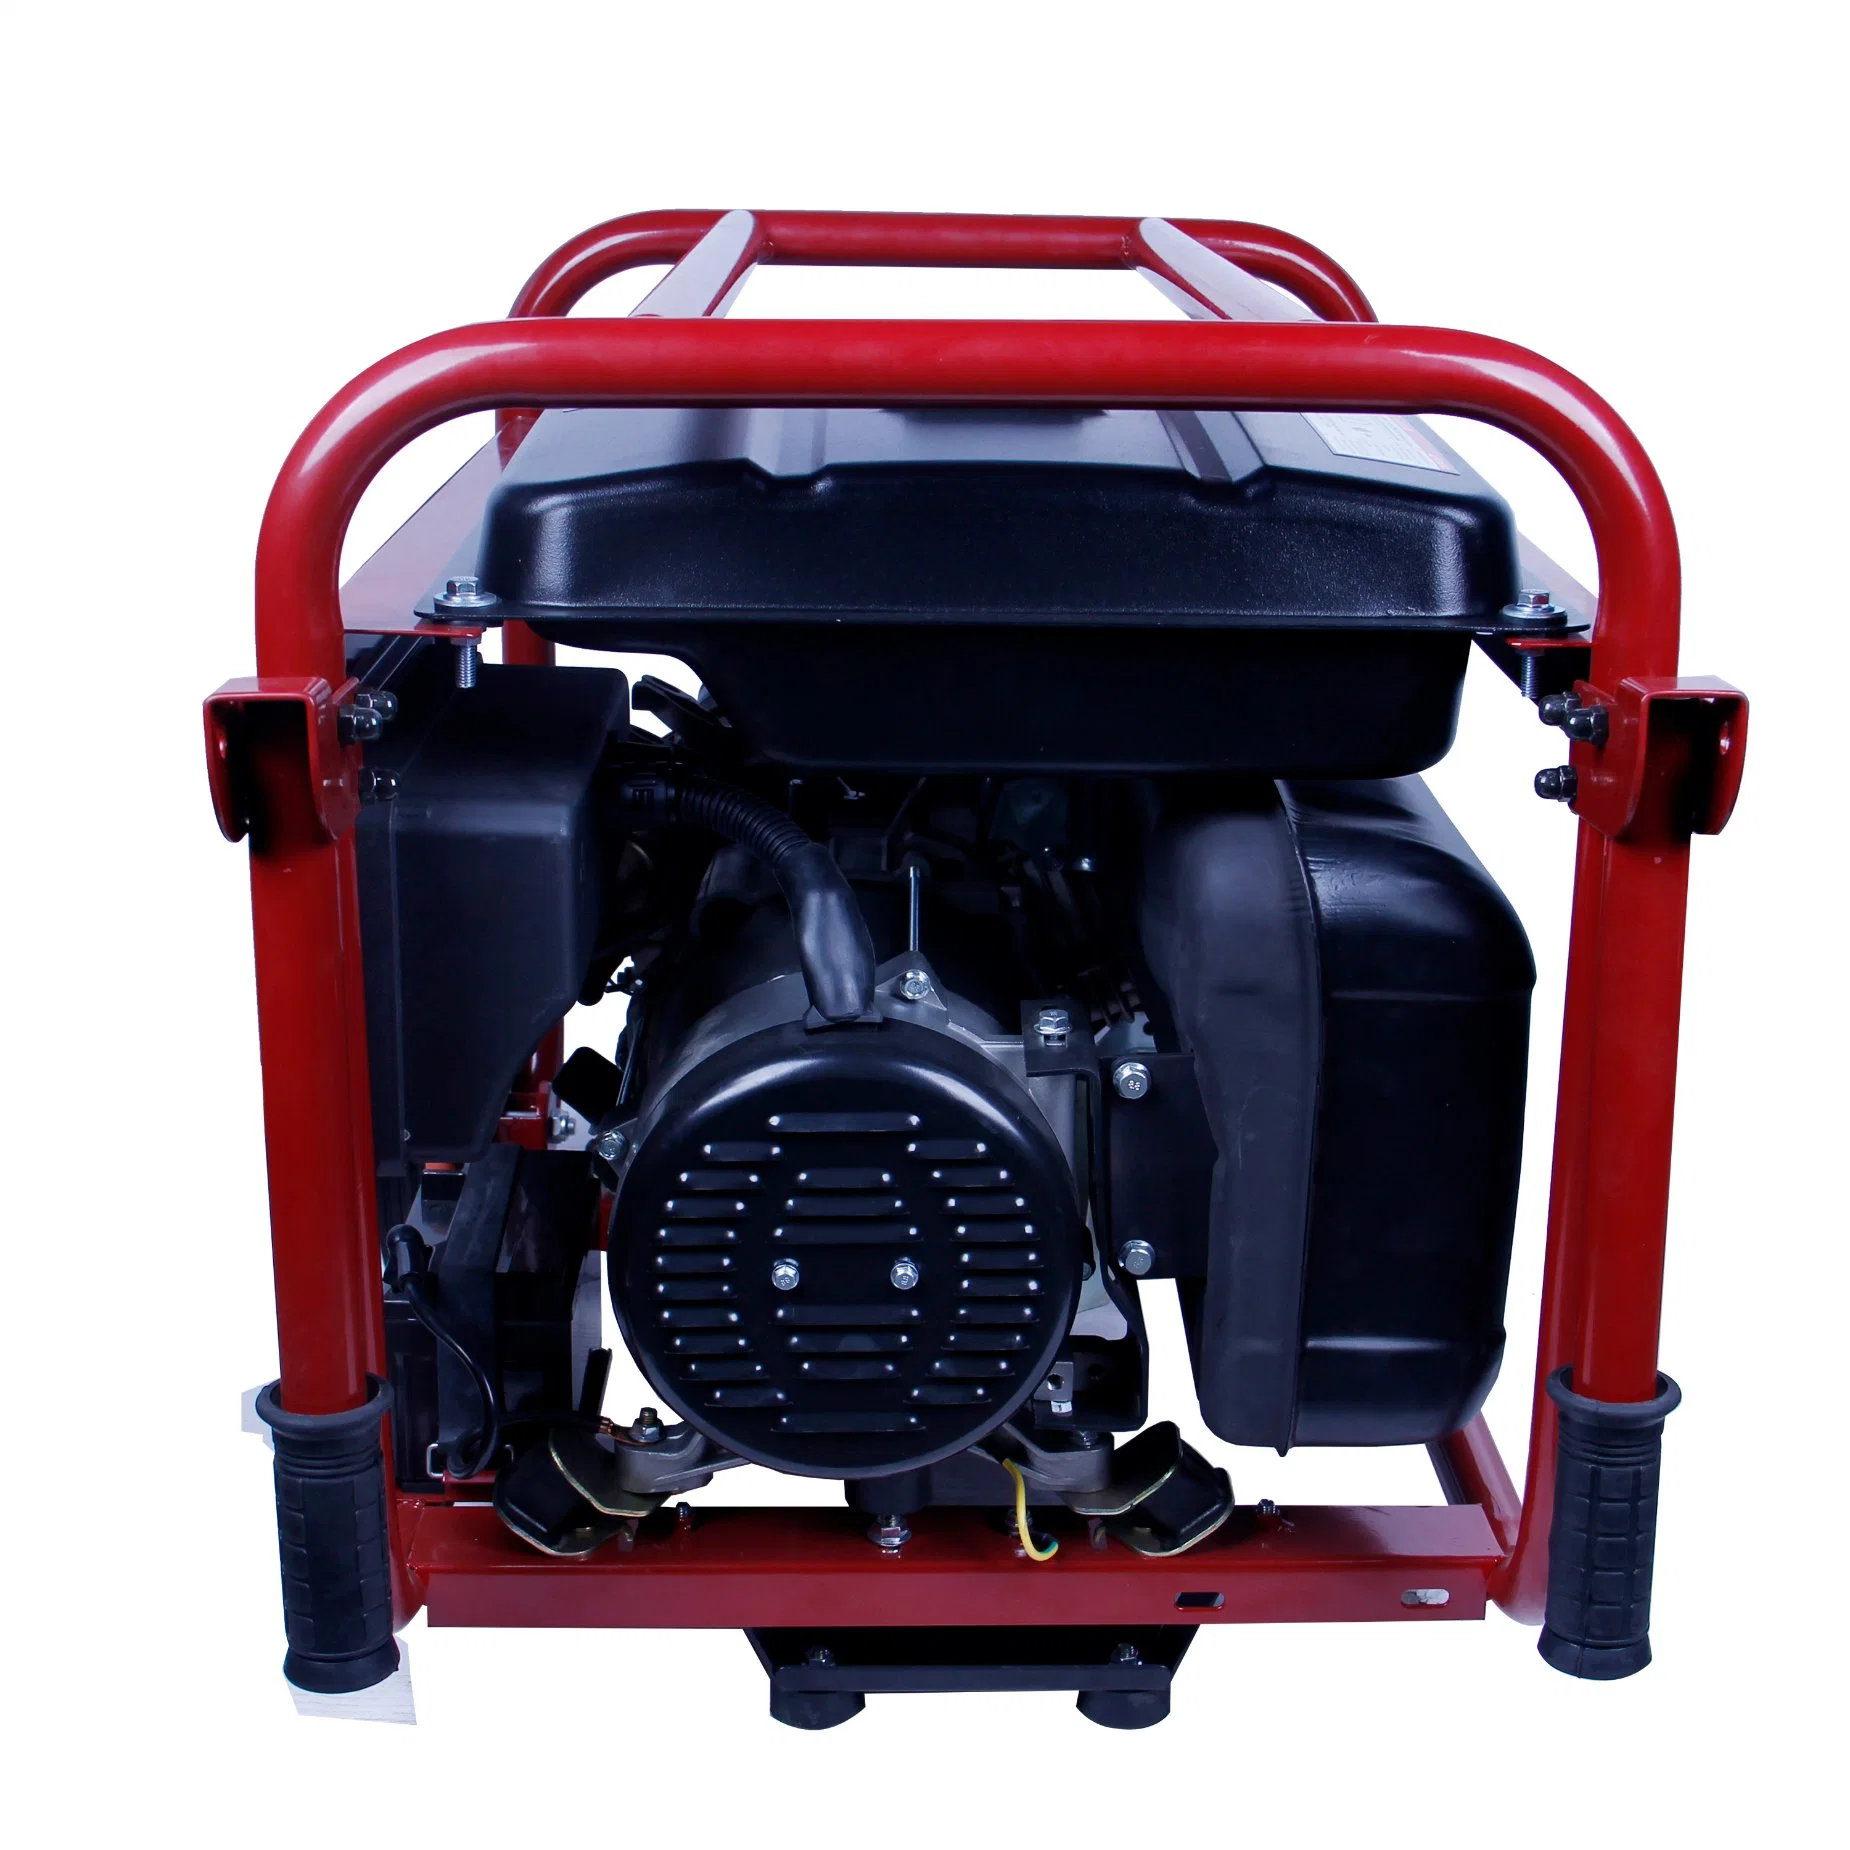 7000W 7500W 6kVA 7kVA Electric Home Power Portable Gasoline Petrol Gas Generator for Sale